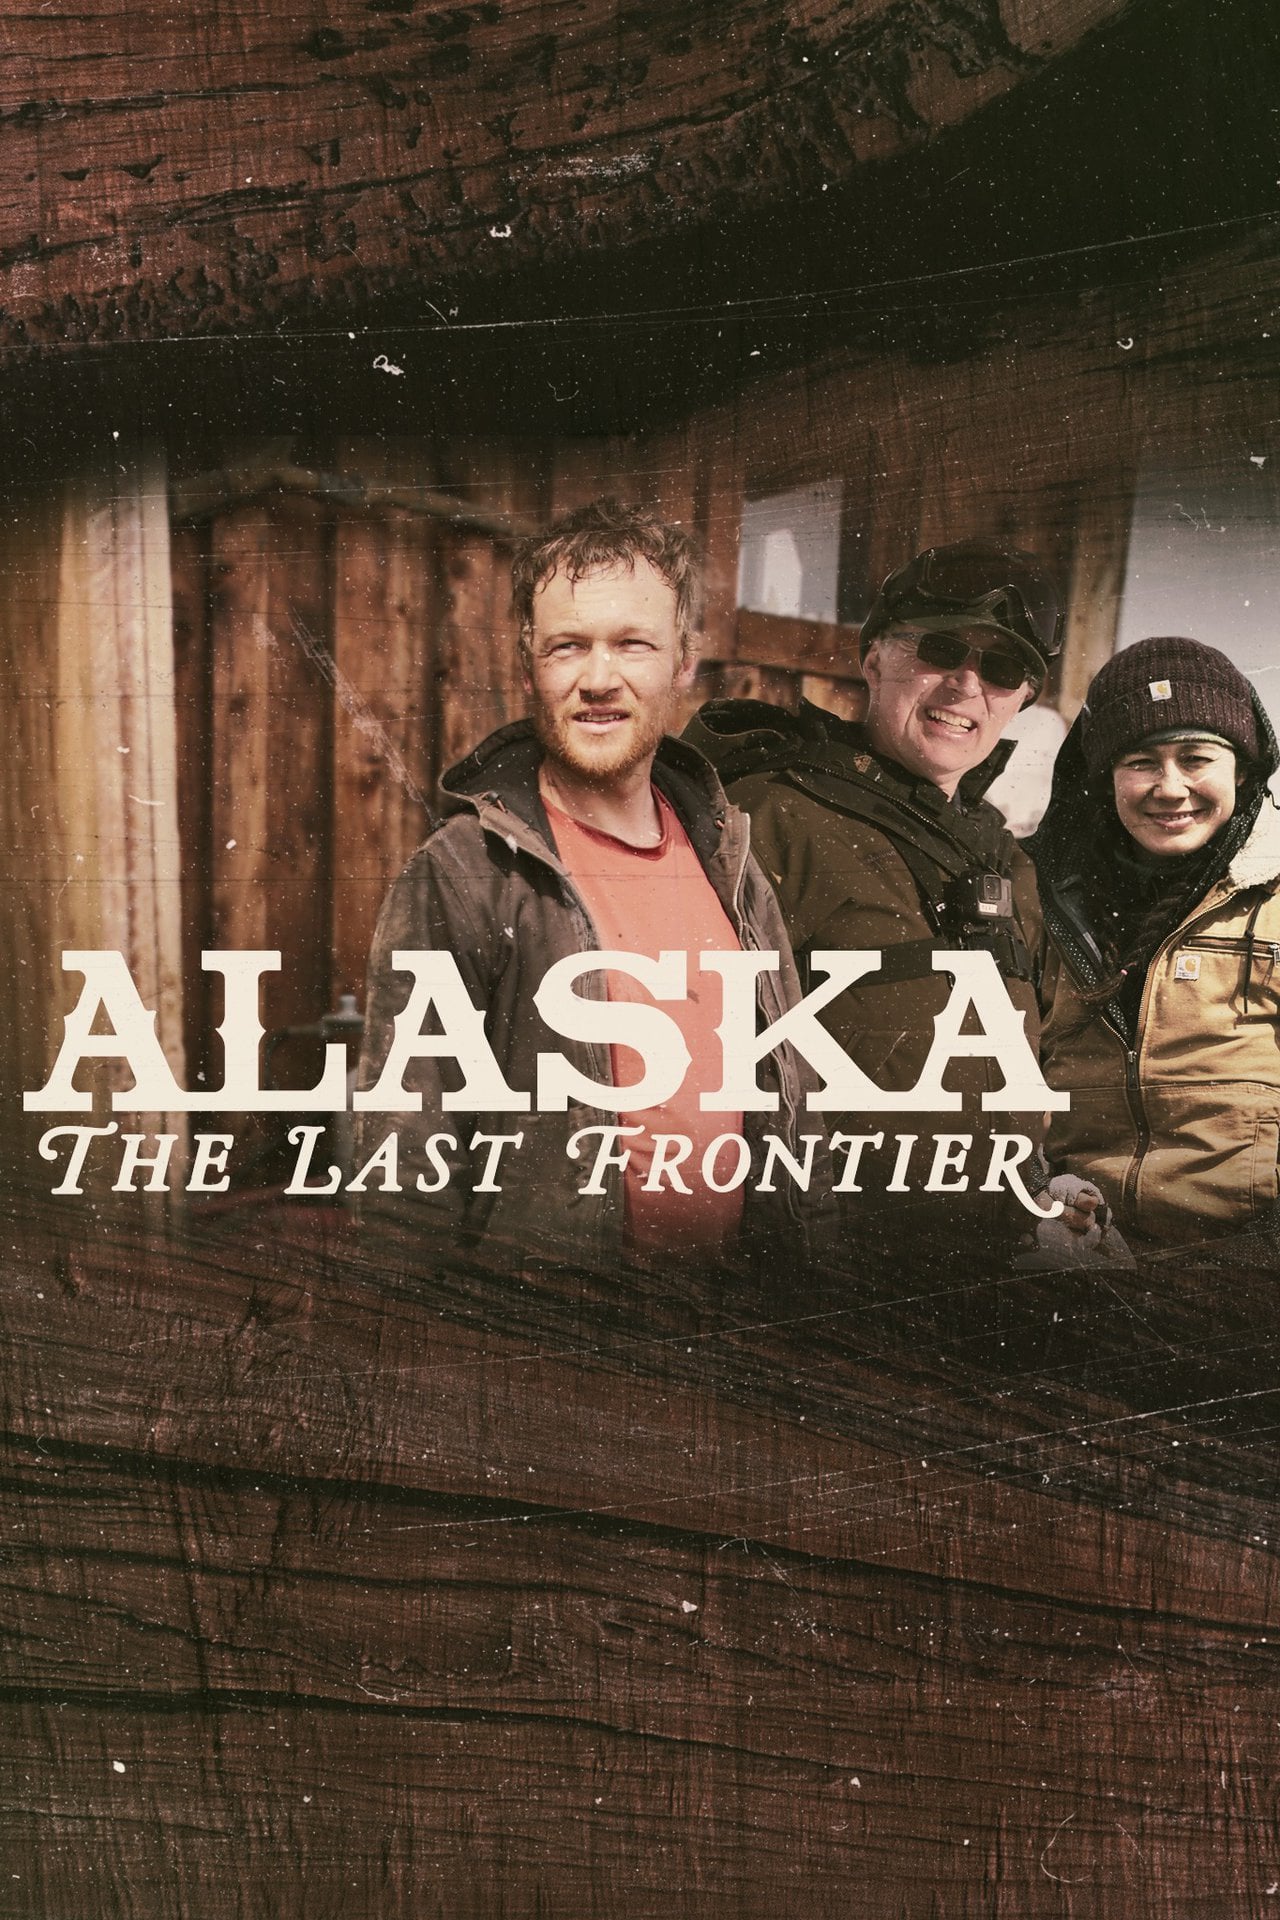 Caratula de Alaska: The Last Frontier (Alaska, última frontera) 